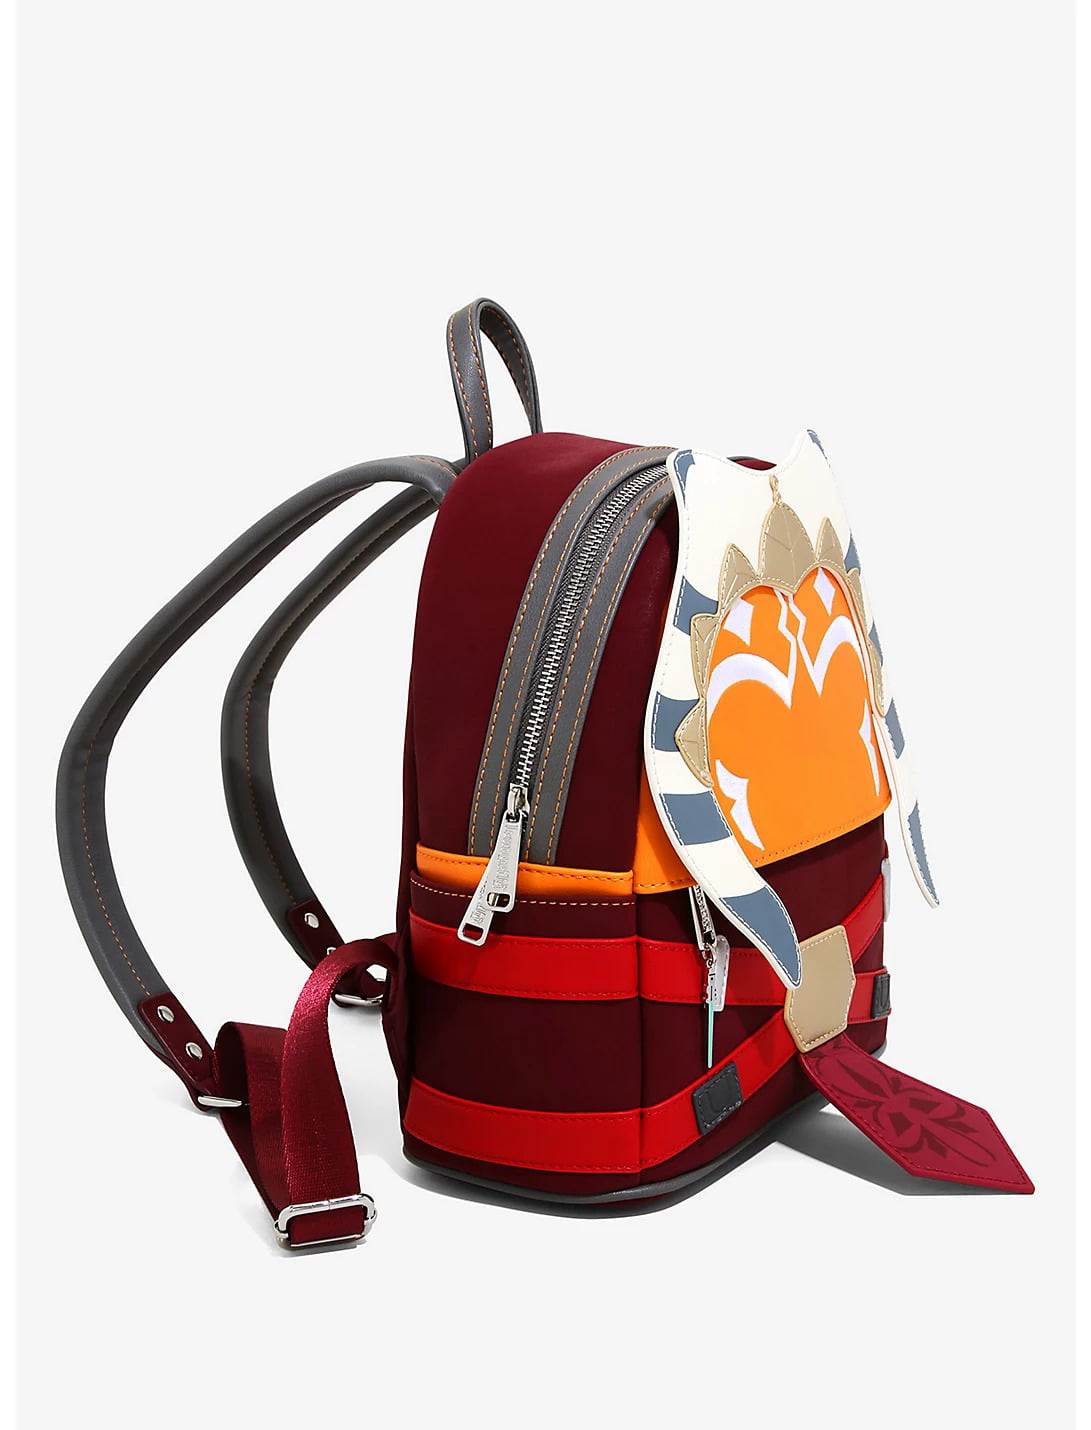 Loungefly Ahsoka Tano Mini Backpack, Star Wars